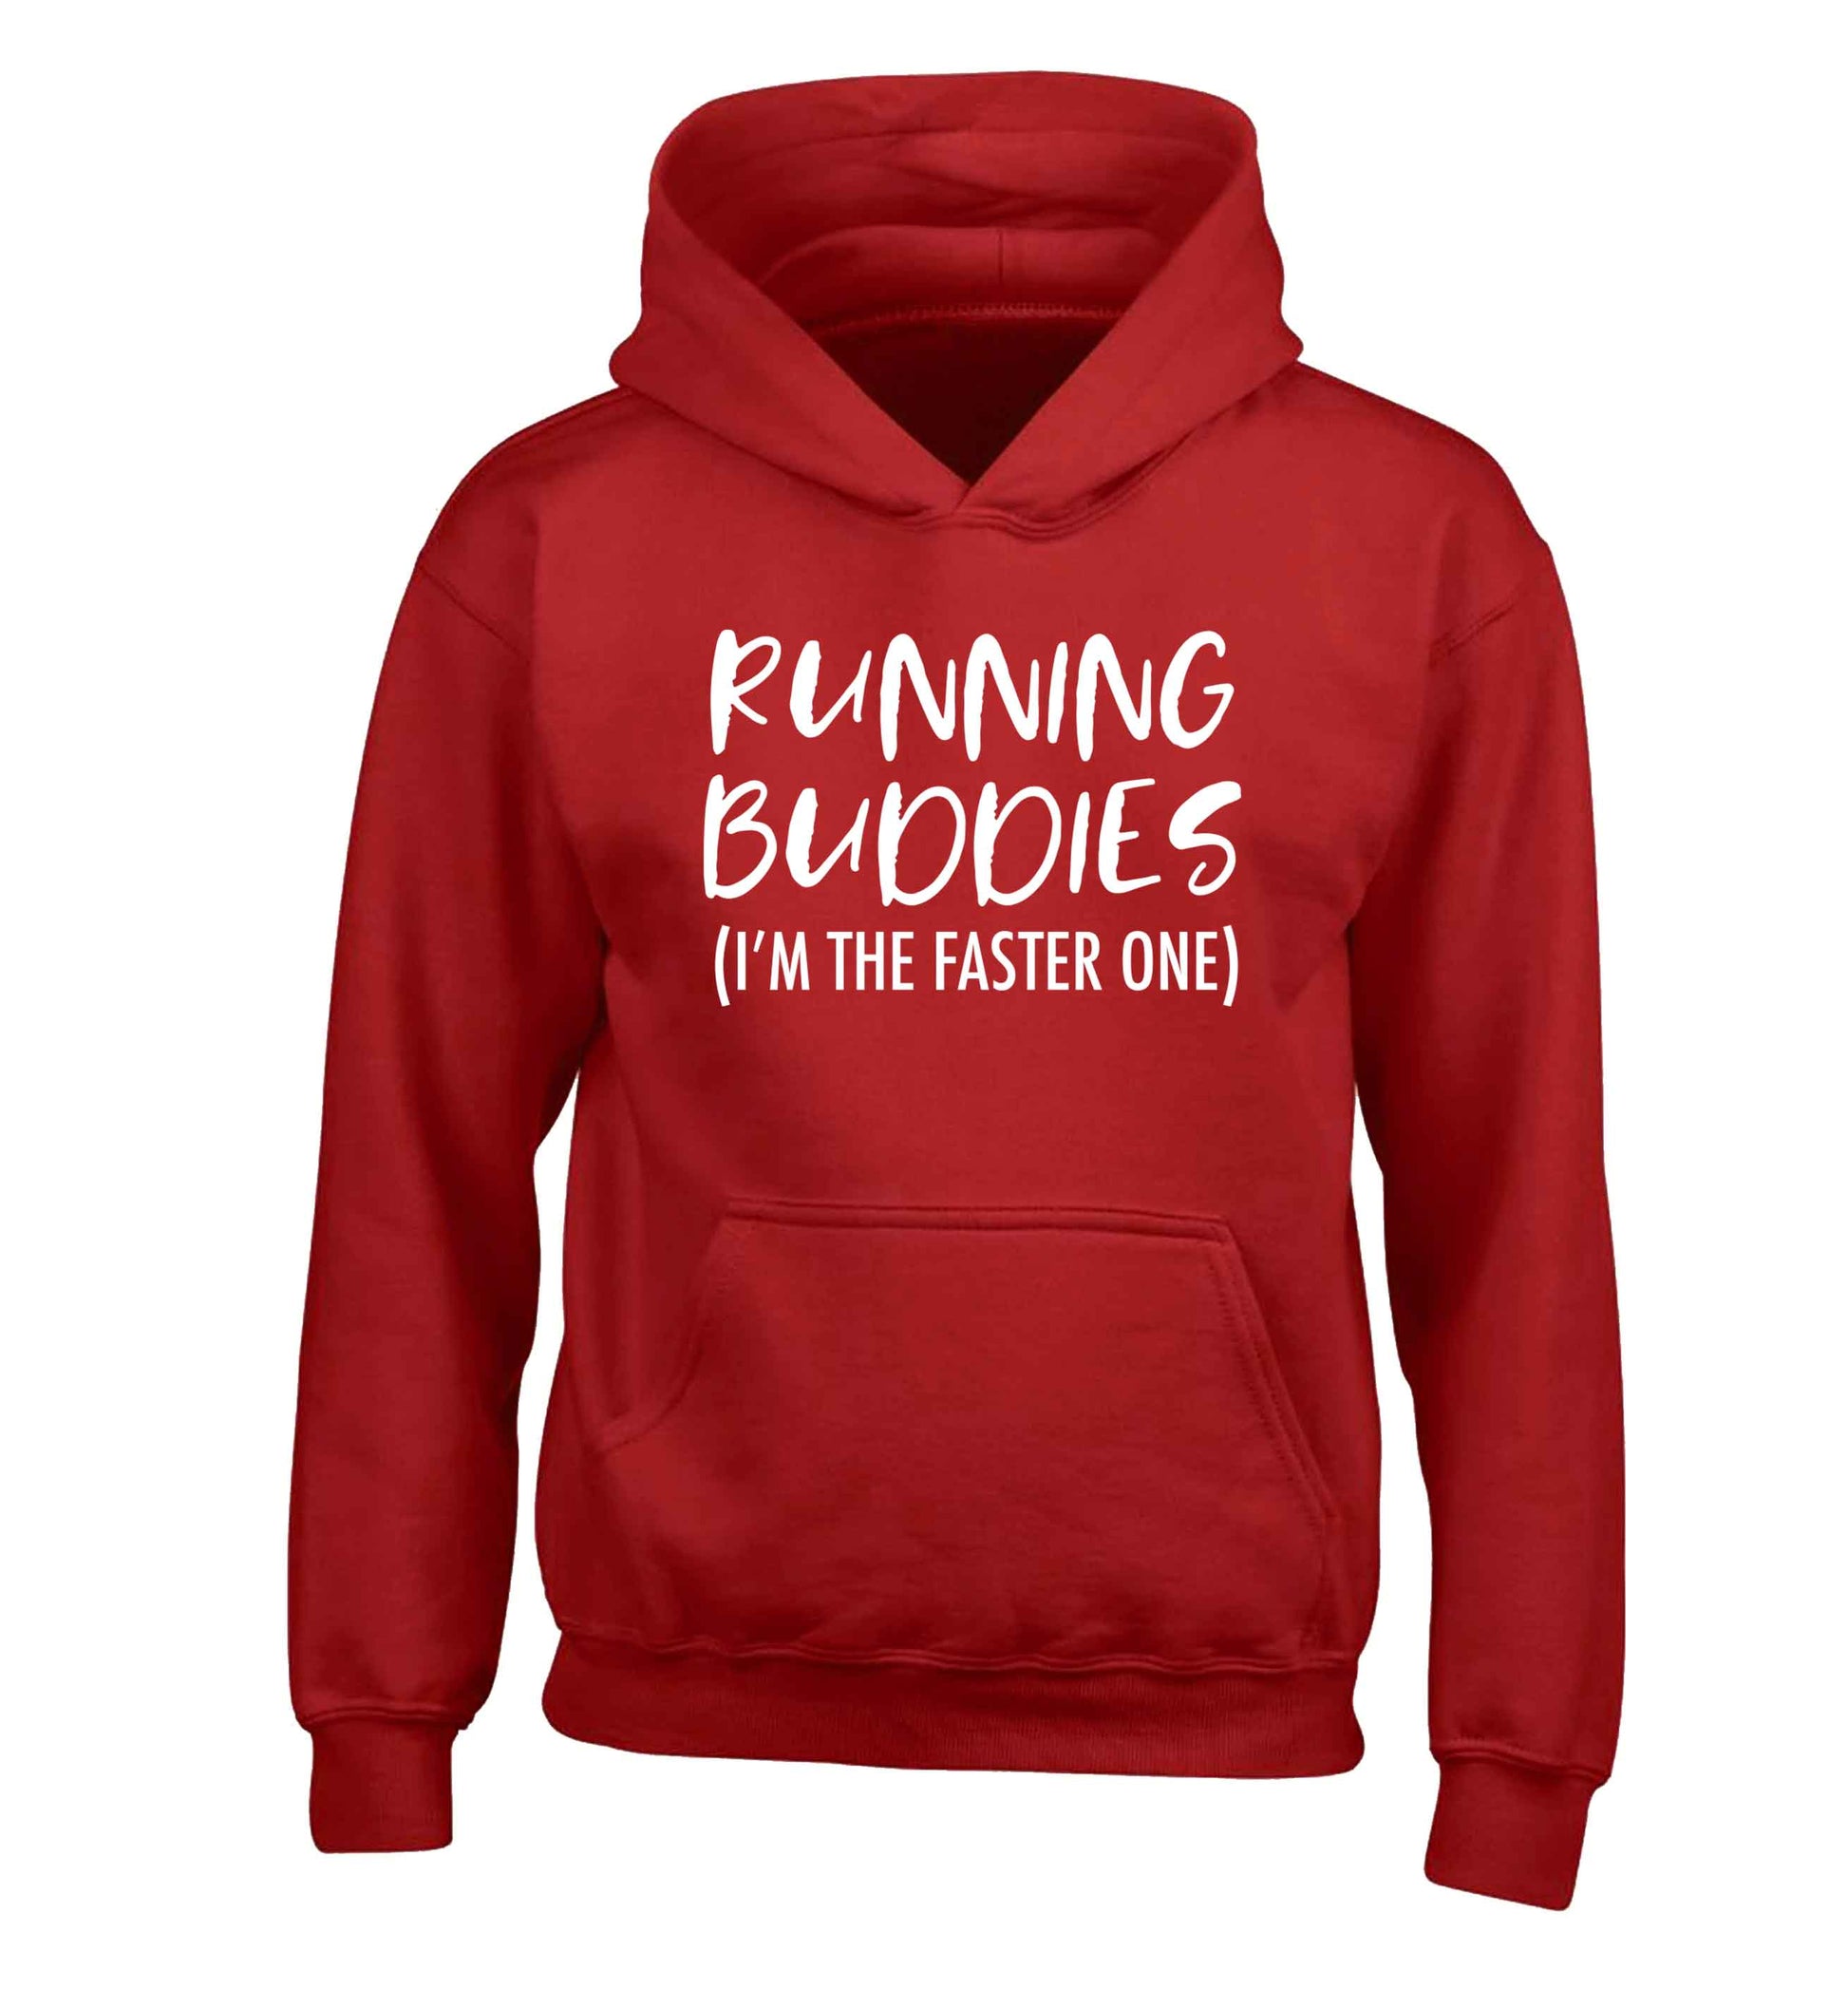 Running buddies (I'm the faster one) children's red hoodie 12-13 Years